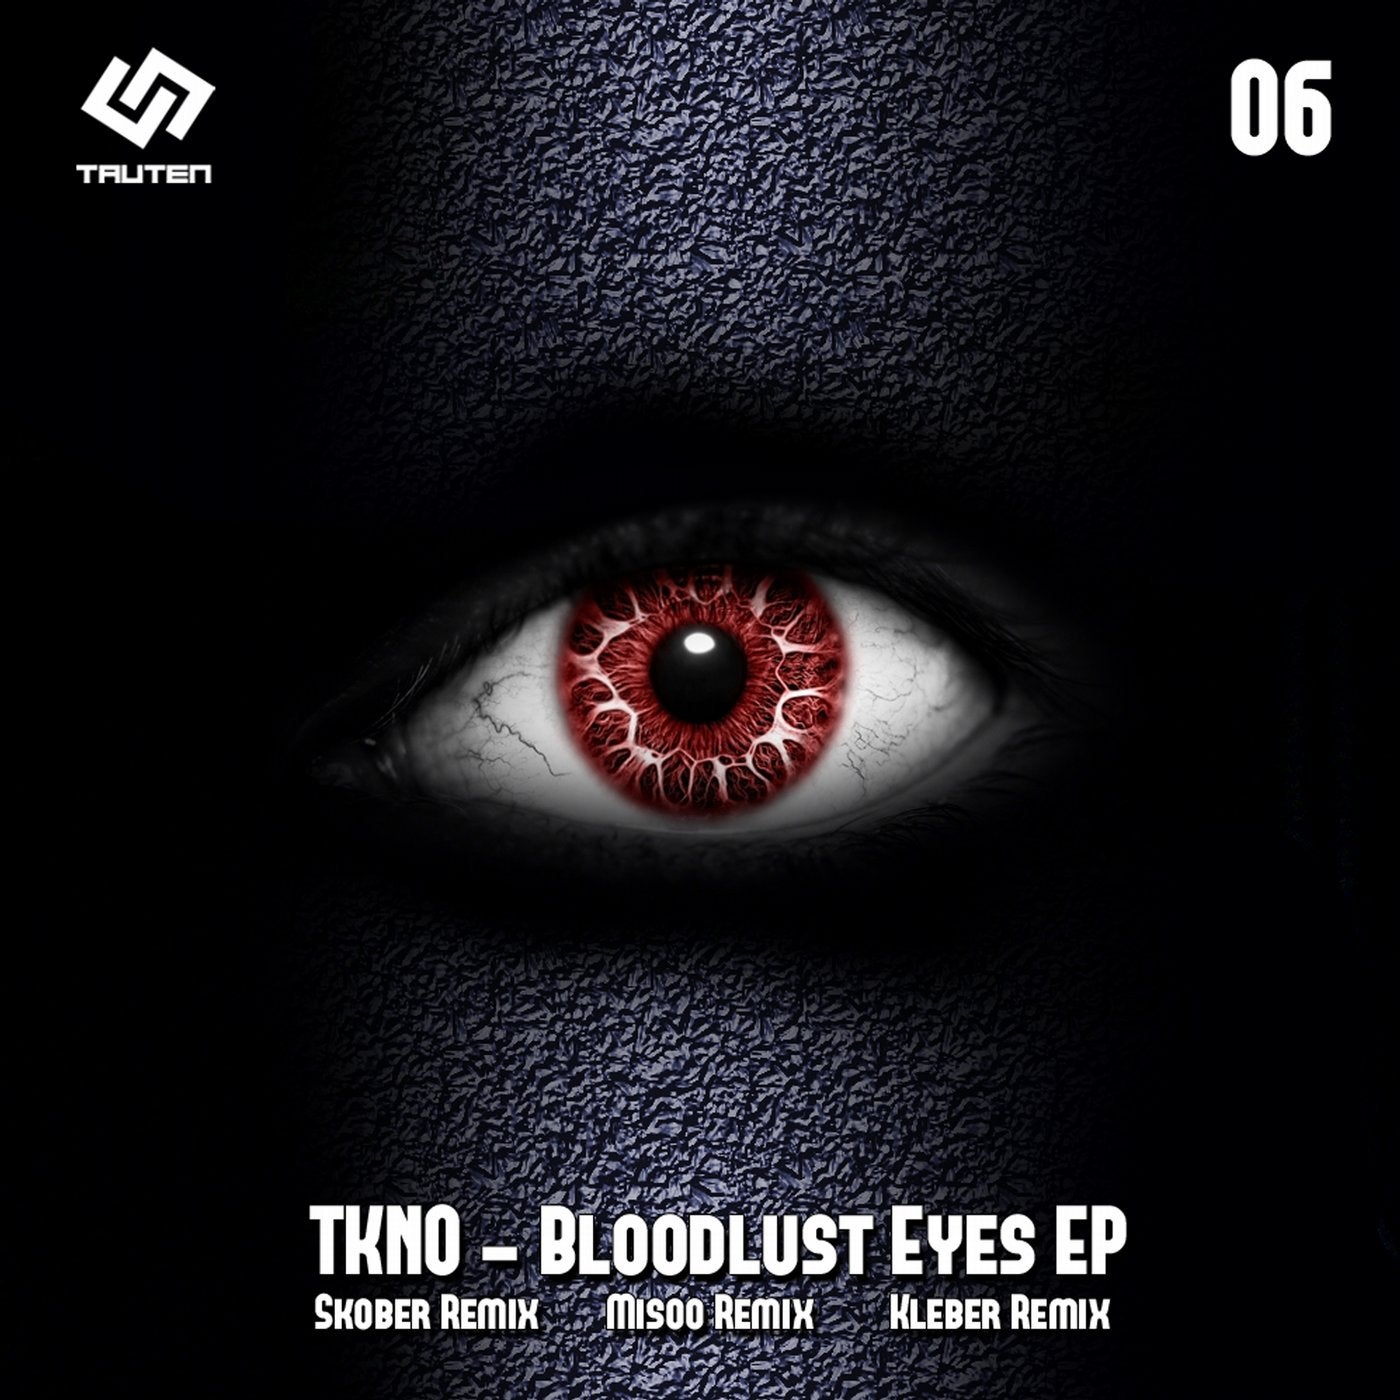 Bloodlust Eyes EP